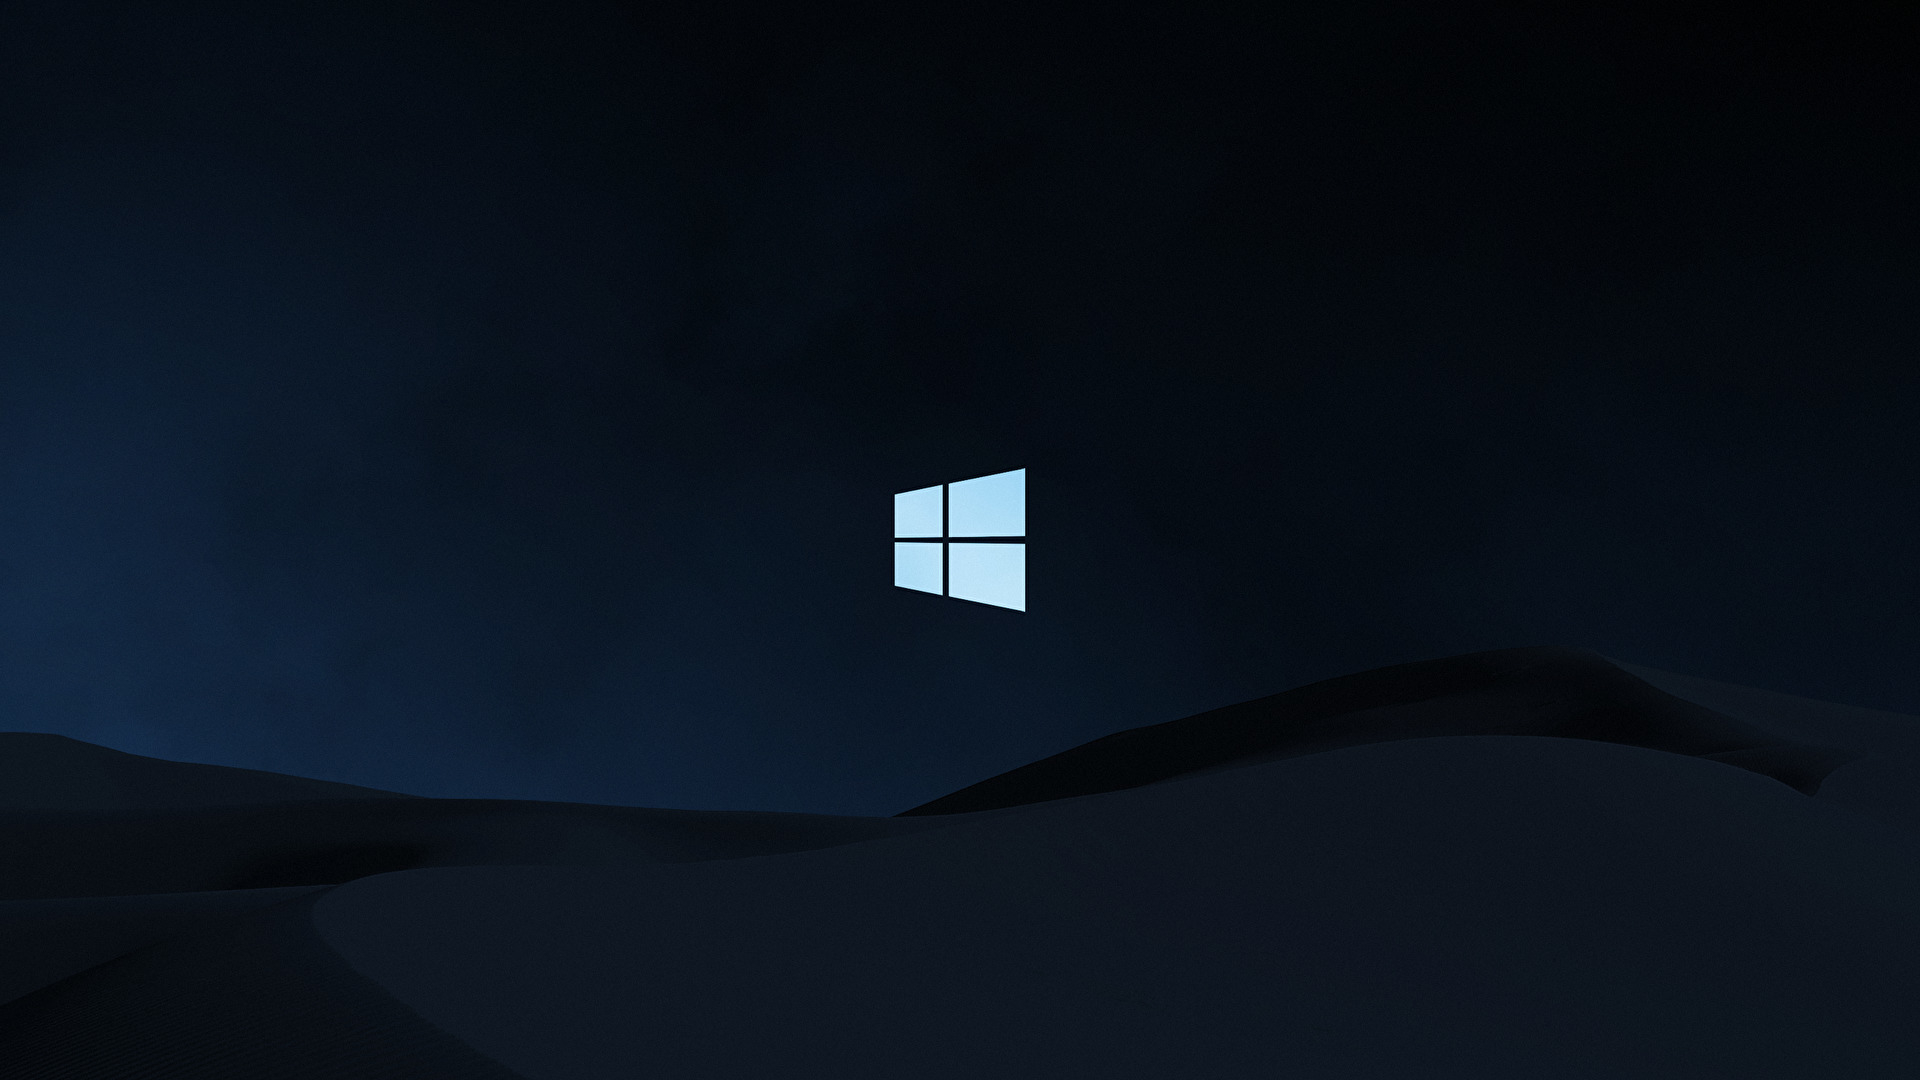 Windows 10 Clean Dark Background, HD Brands 4K Wallpapers ...